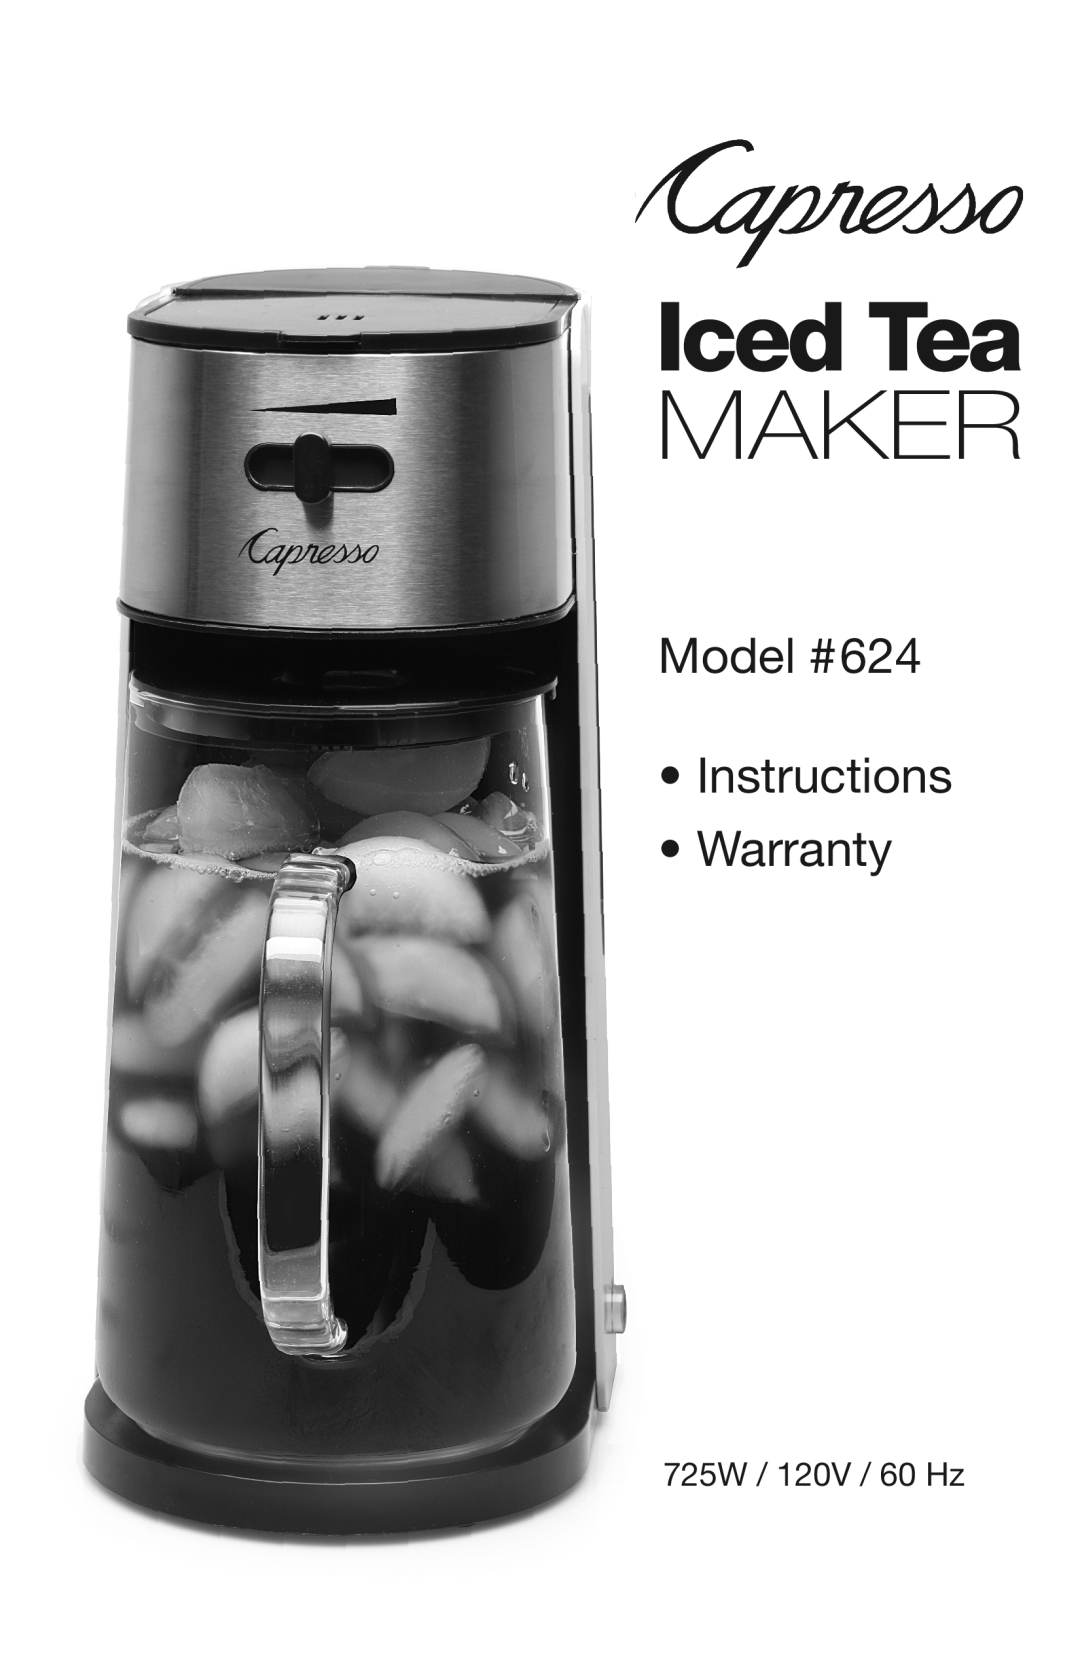 Capresso warranty Iced Tea, Maker, Model #624 Instructions Warranty, 725W / 120V / 60 Hz 